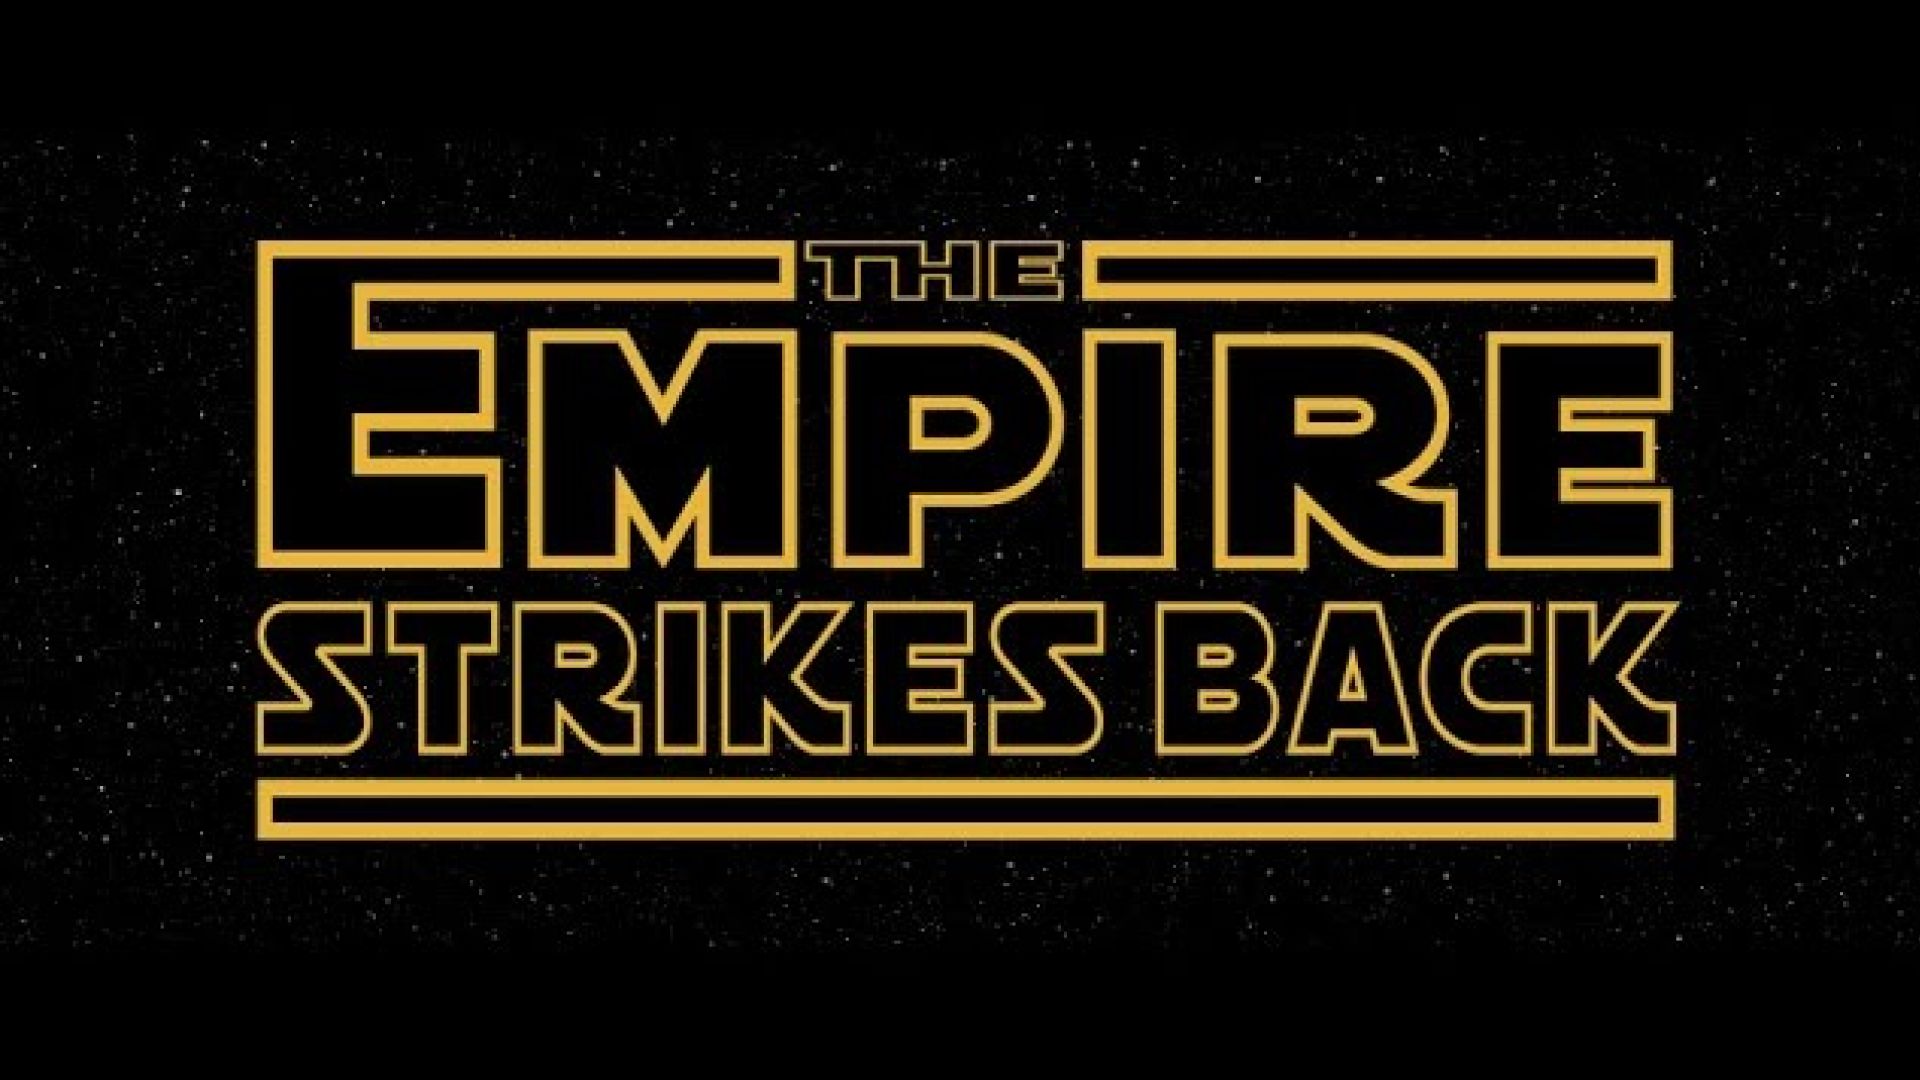 Star Wars: The Empire Strikes Back Modern Trailer